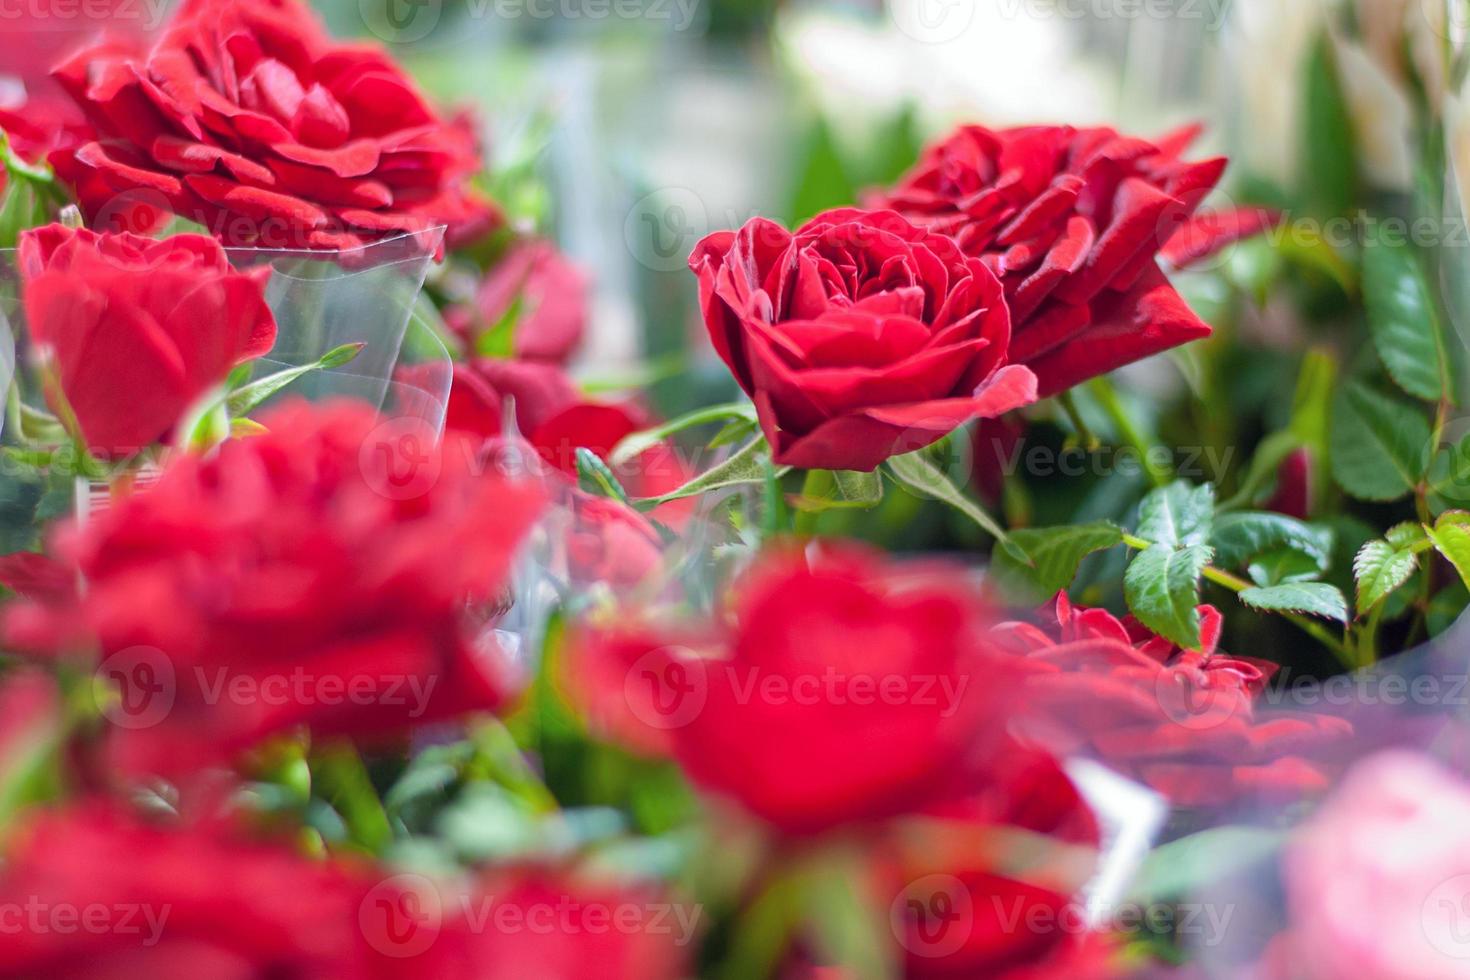 rot eingetopft Rosen verkauft im Markt foto